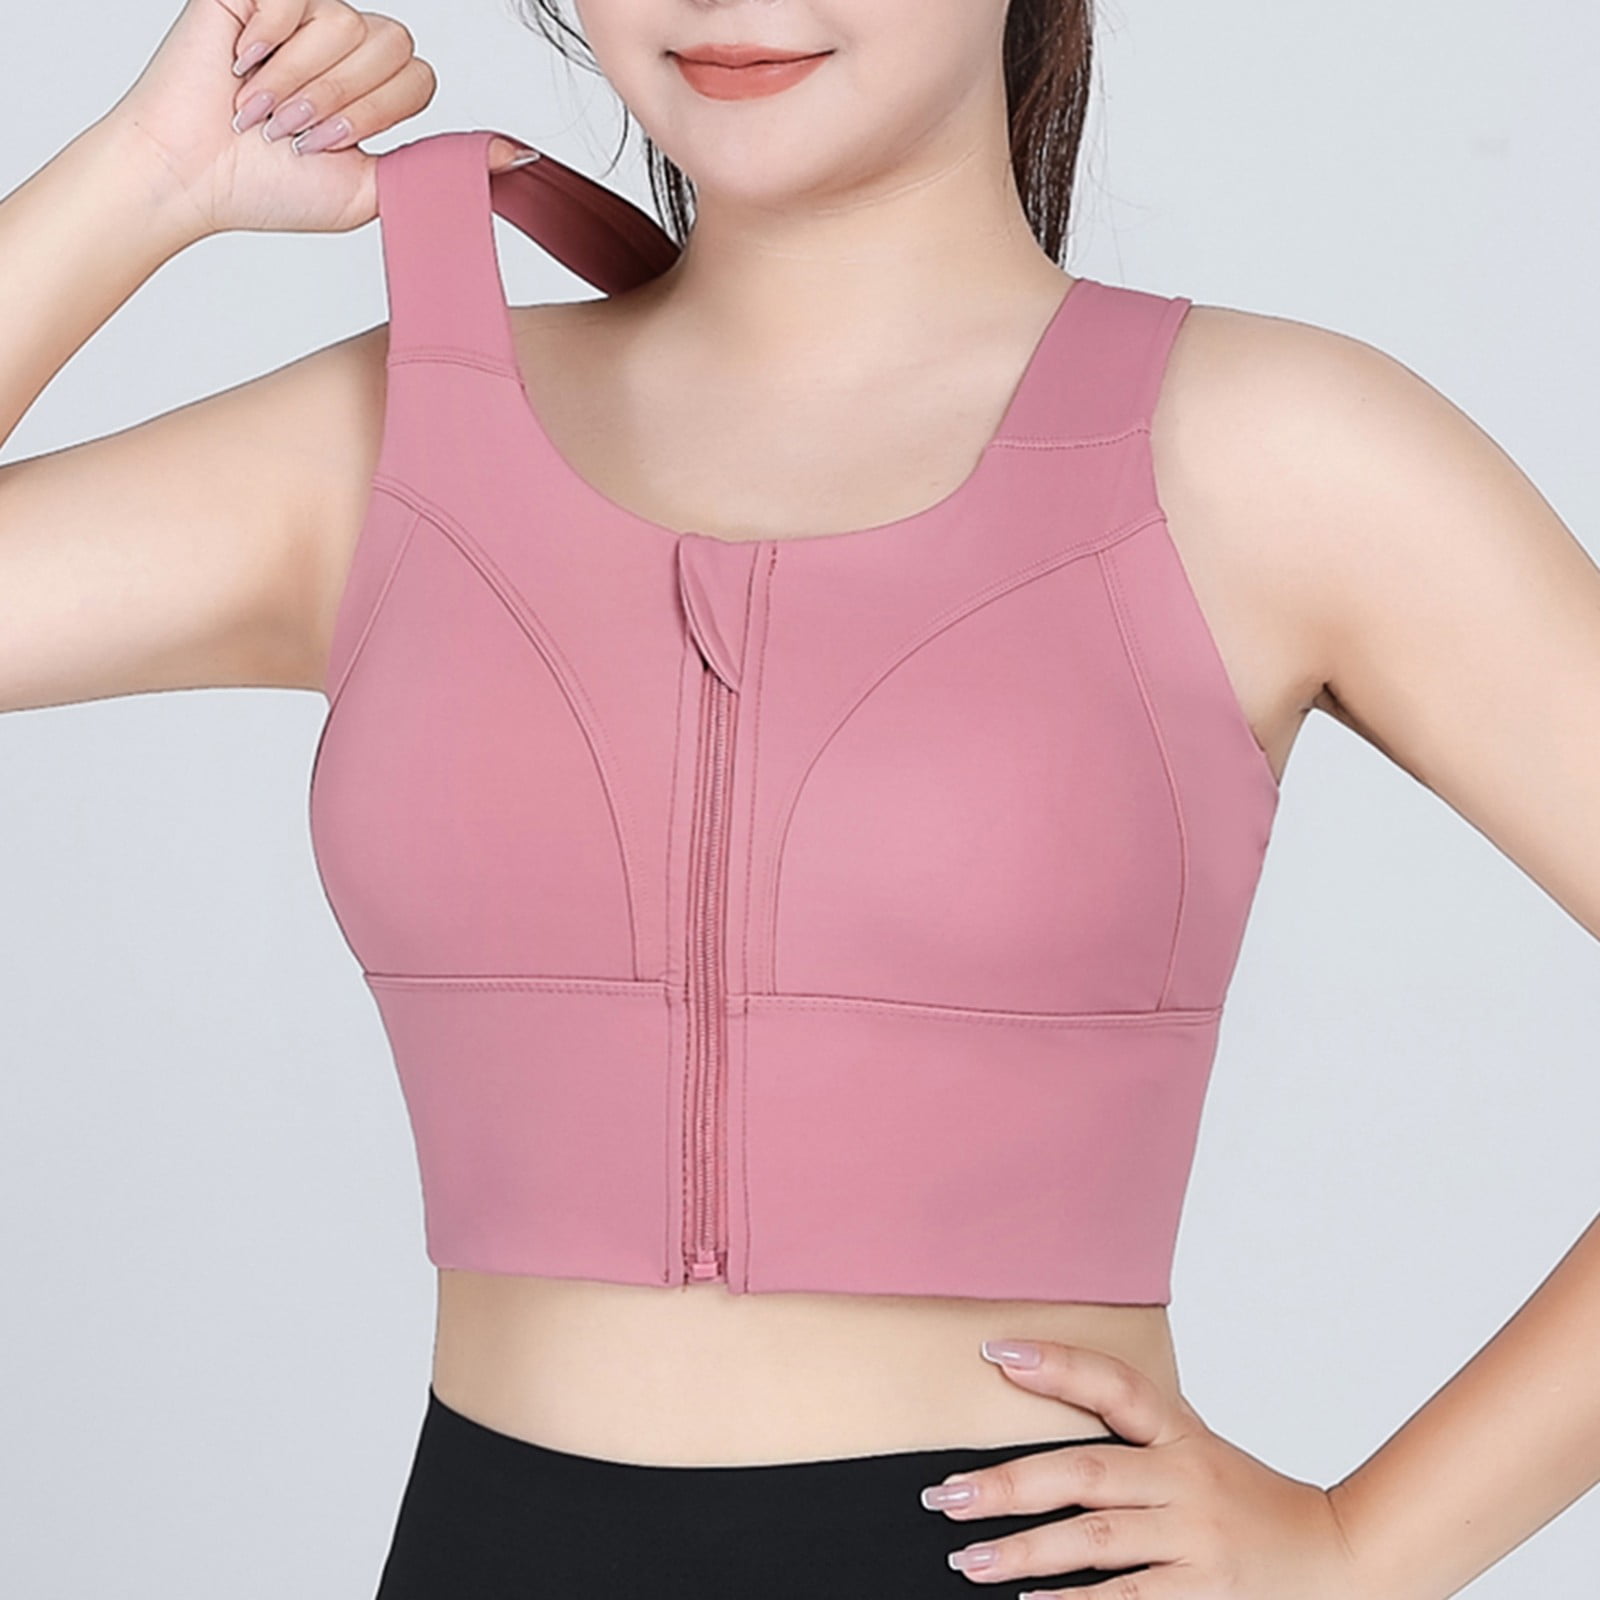 Tdoqot Women's Seamless Plus Size Front Closure High Impact Zip up Sports  Bra Pink Size XXXXL 